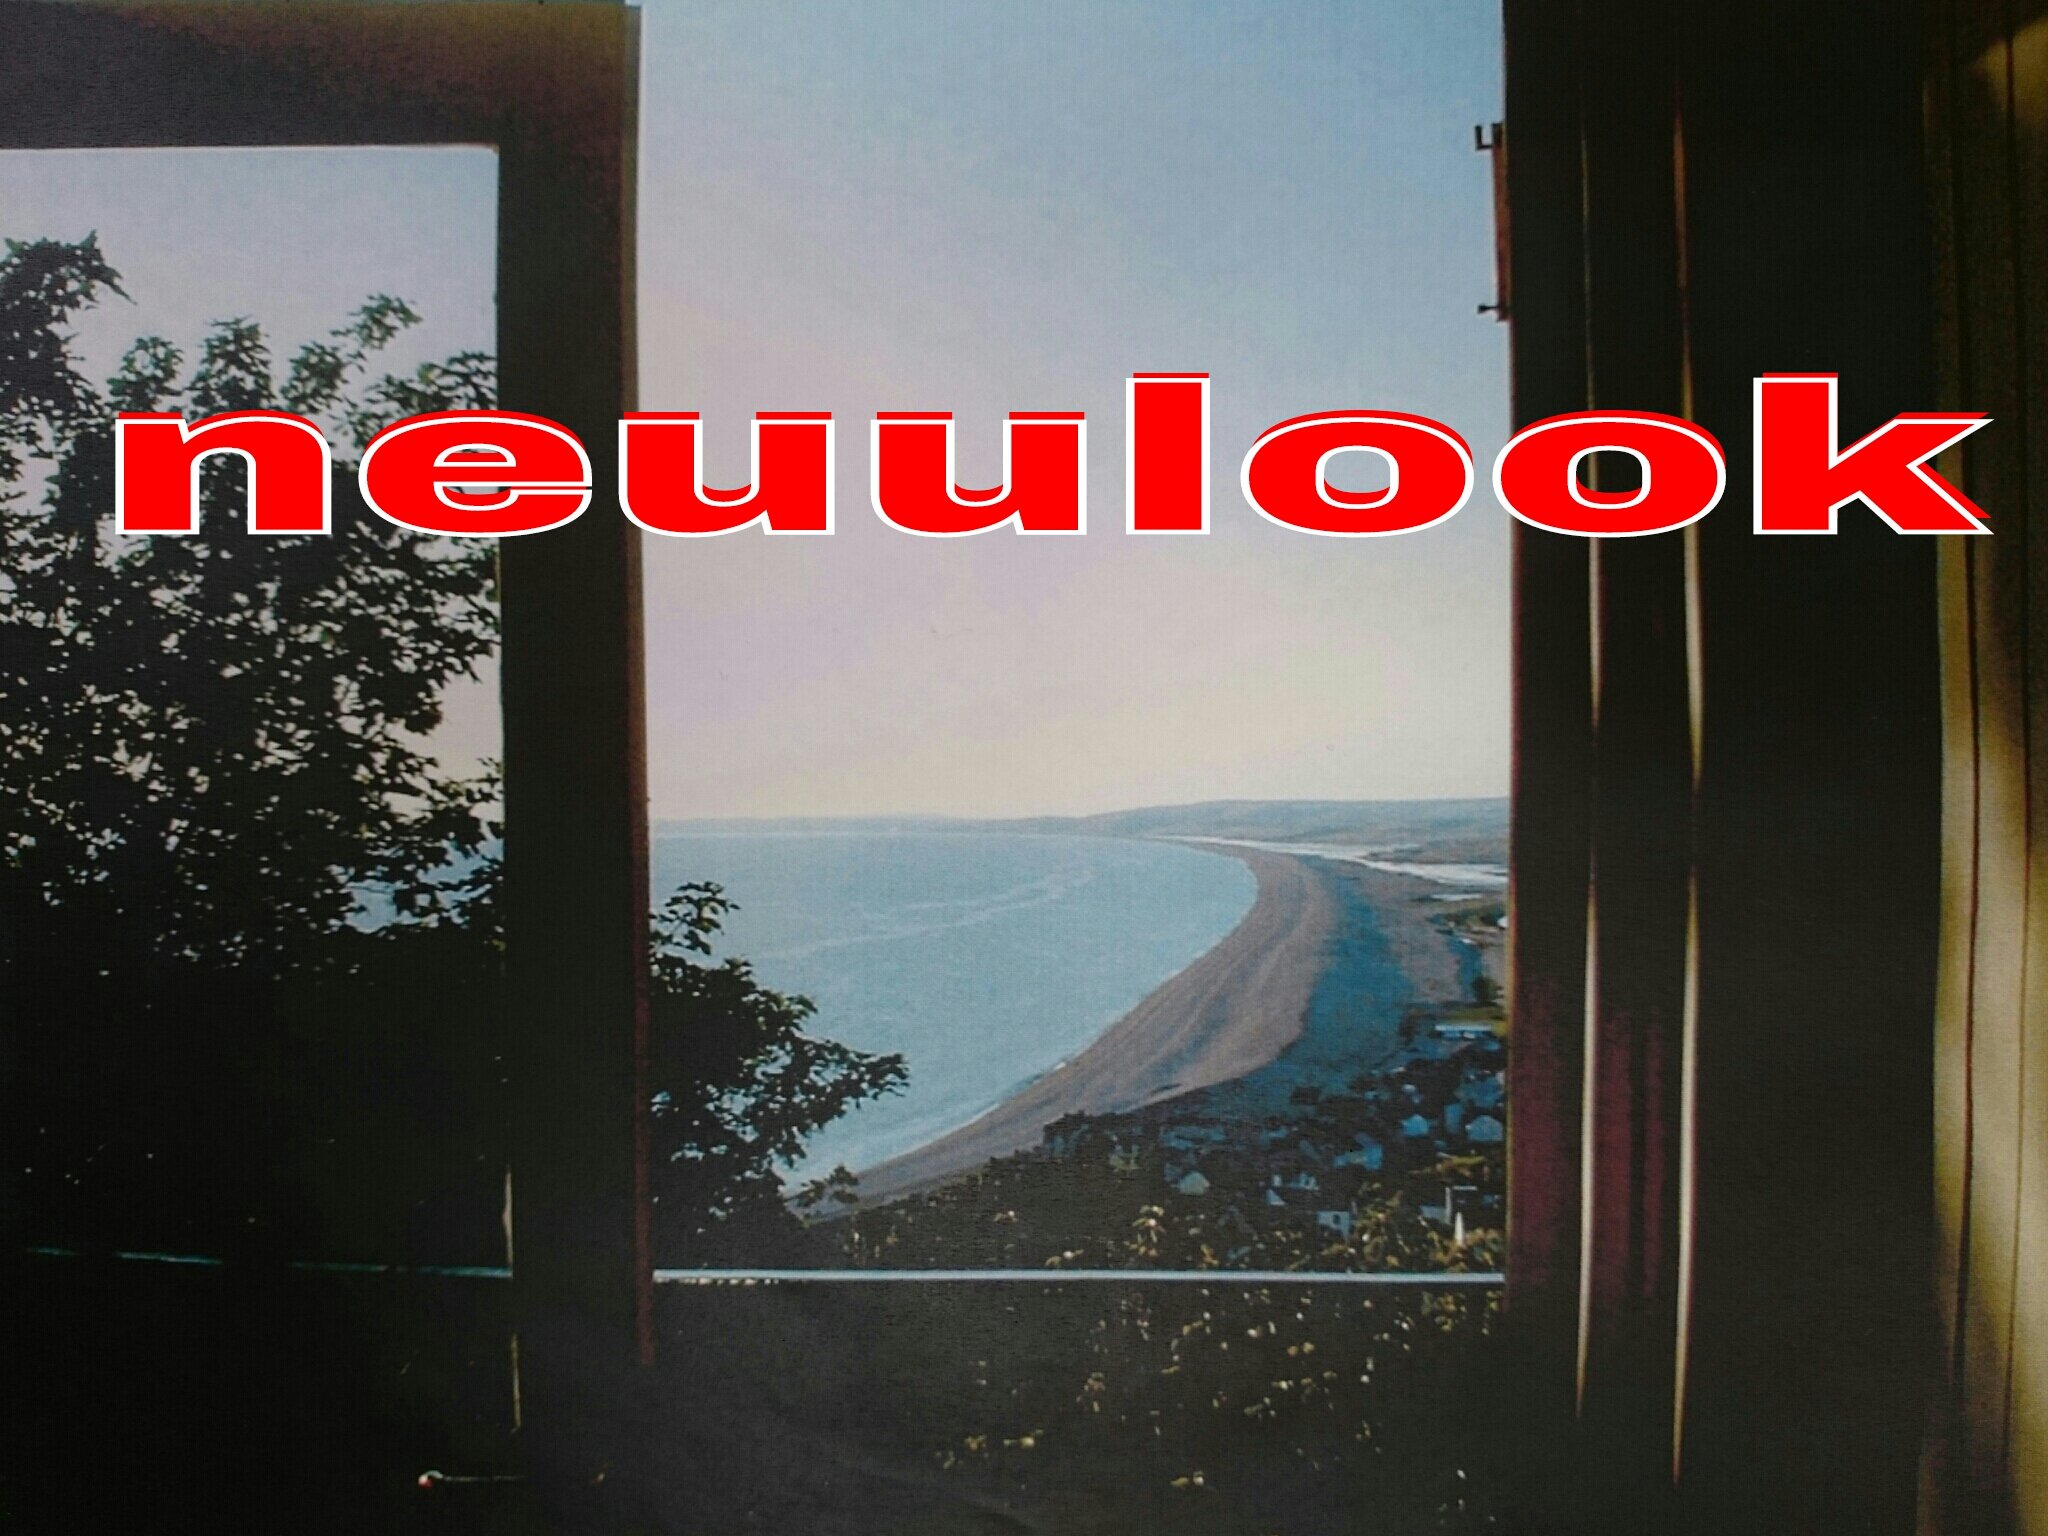 neuulook - Neil Lillystone - arrow logo